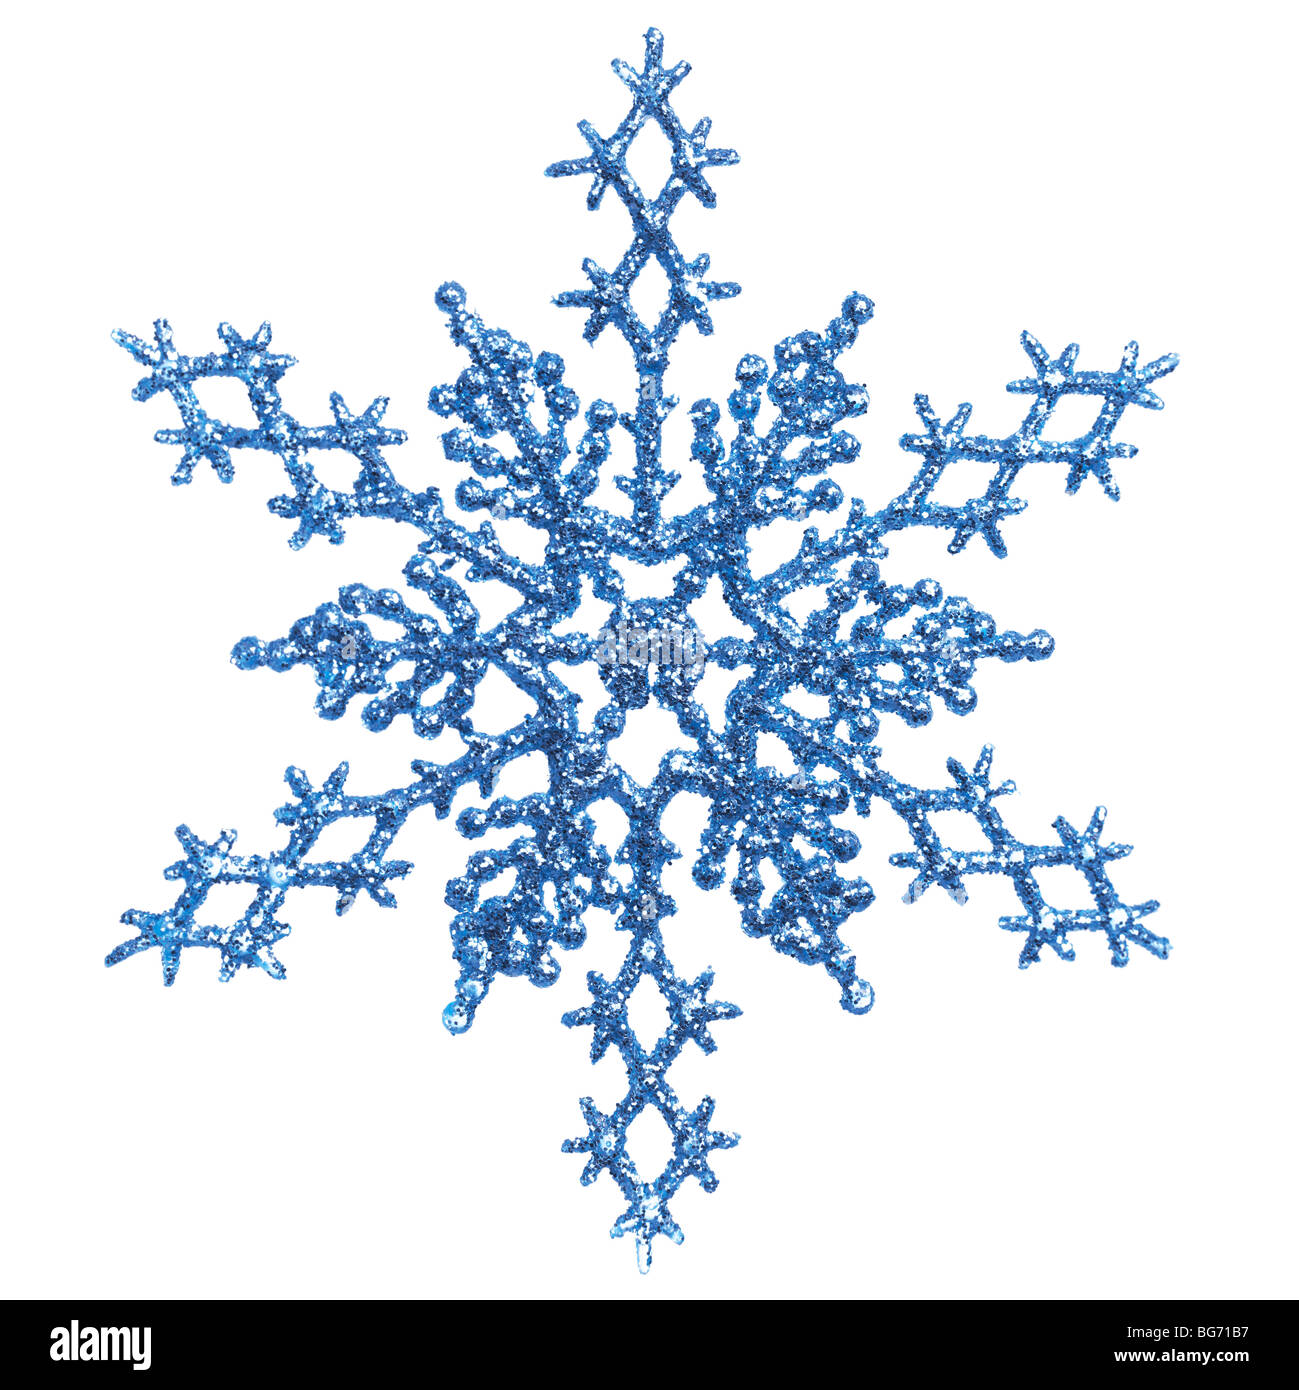 Shiny blue snowflake ornament Christmas tree decoration isolated on white background Stock Photo